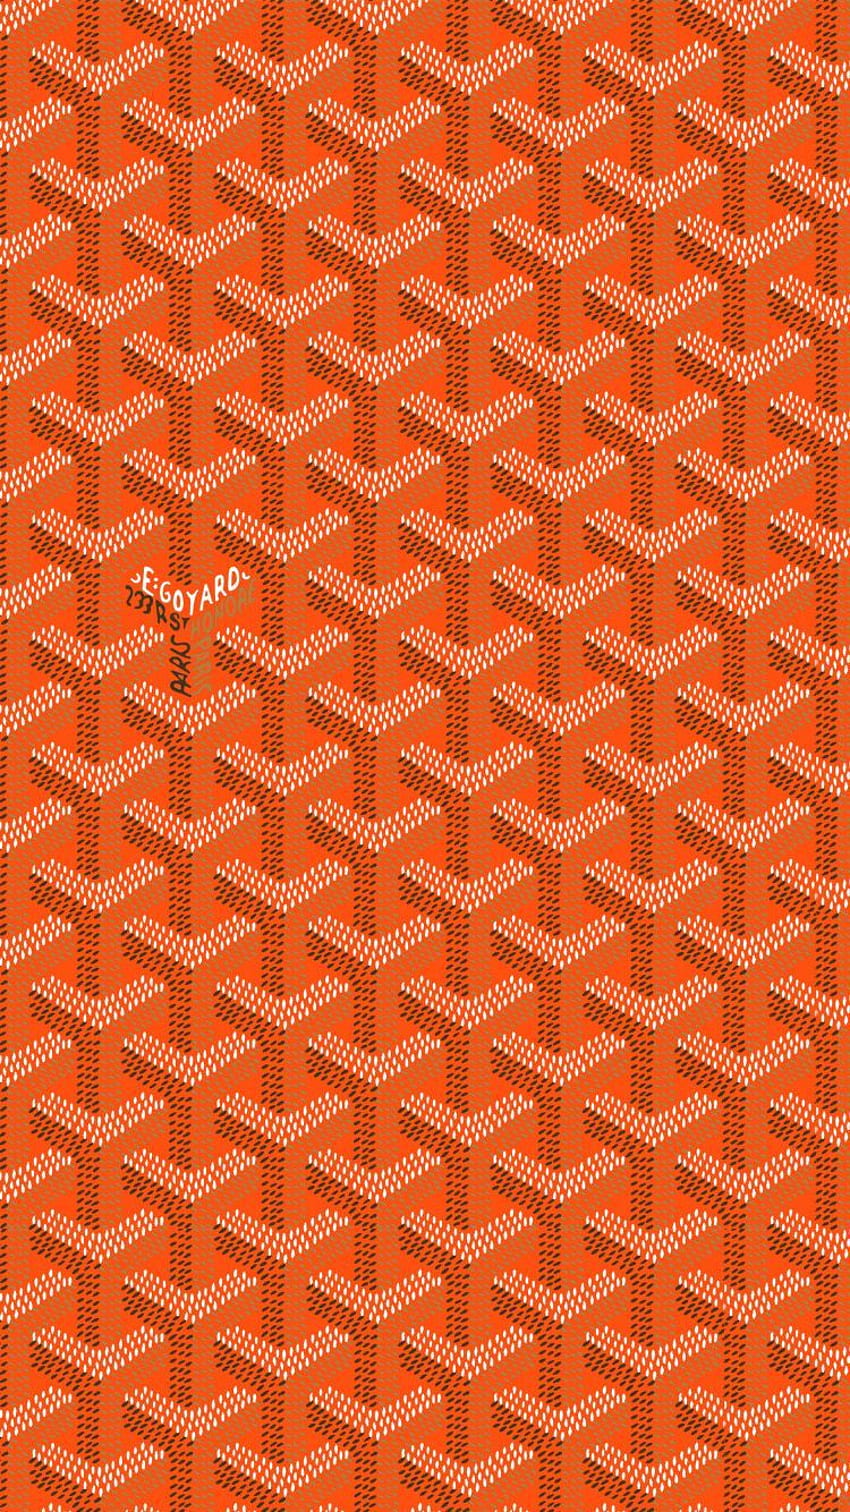 1200x750 Goyard Wallpapers - Wallpaper Cave  Goyard pattern, Iphone  wallpaper themes, Goyard